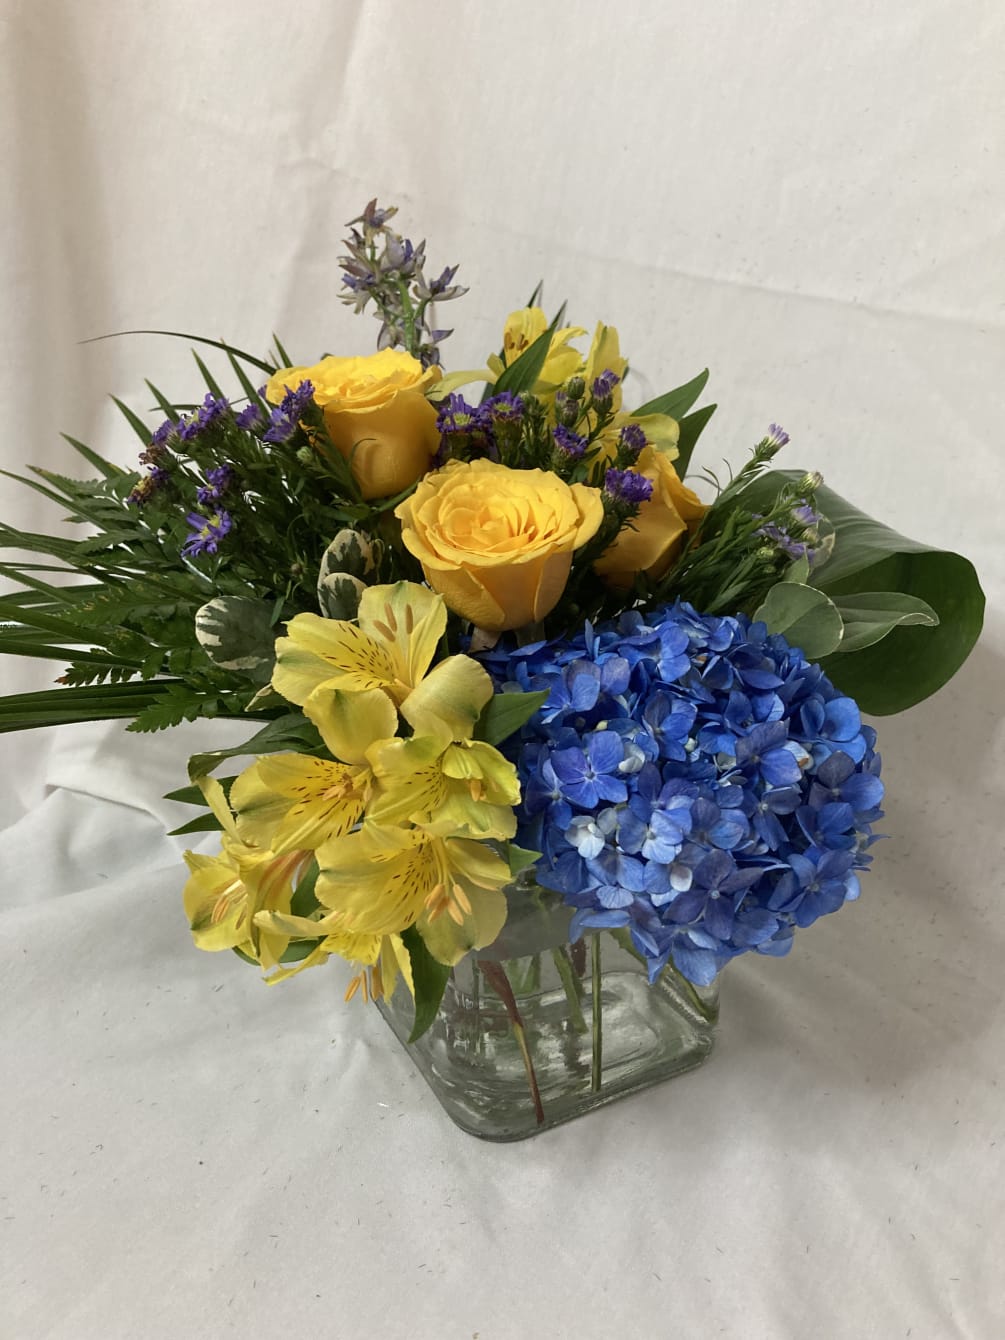 Lovely blue hydrangea, yellow roses, yellow alstromeria, blue delphinium, and purple aster